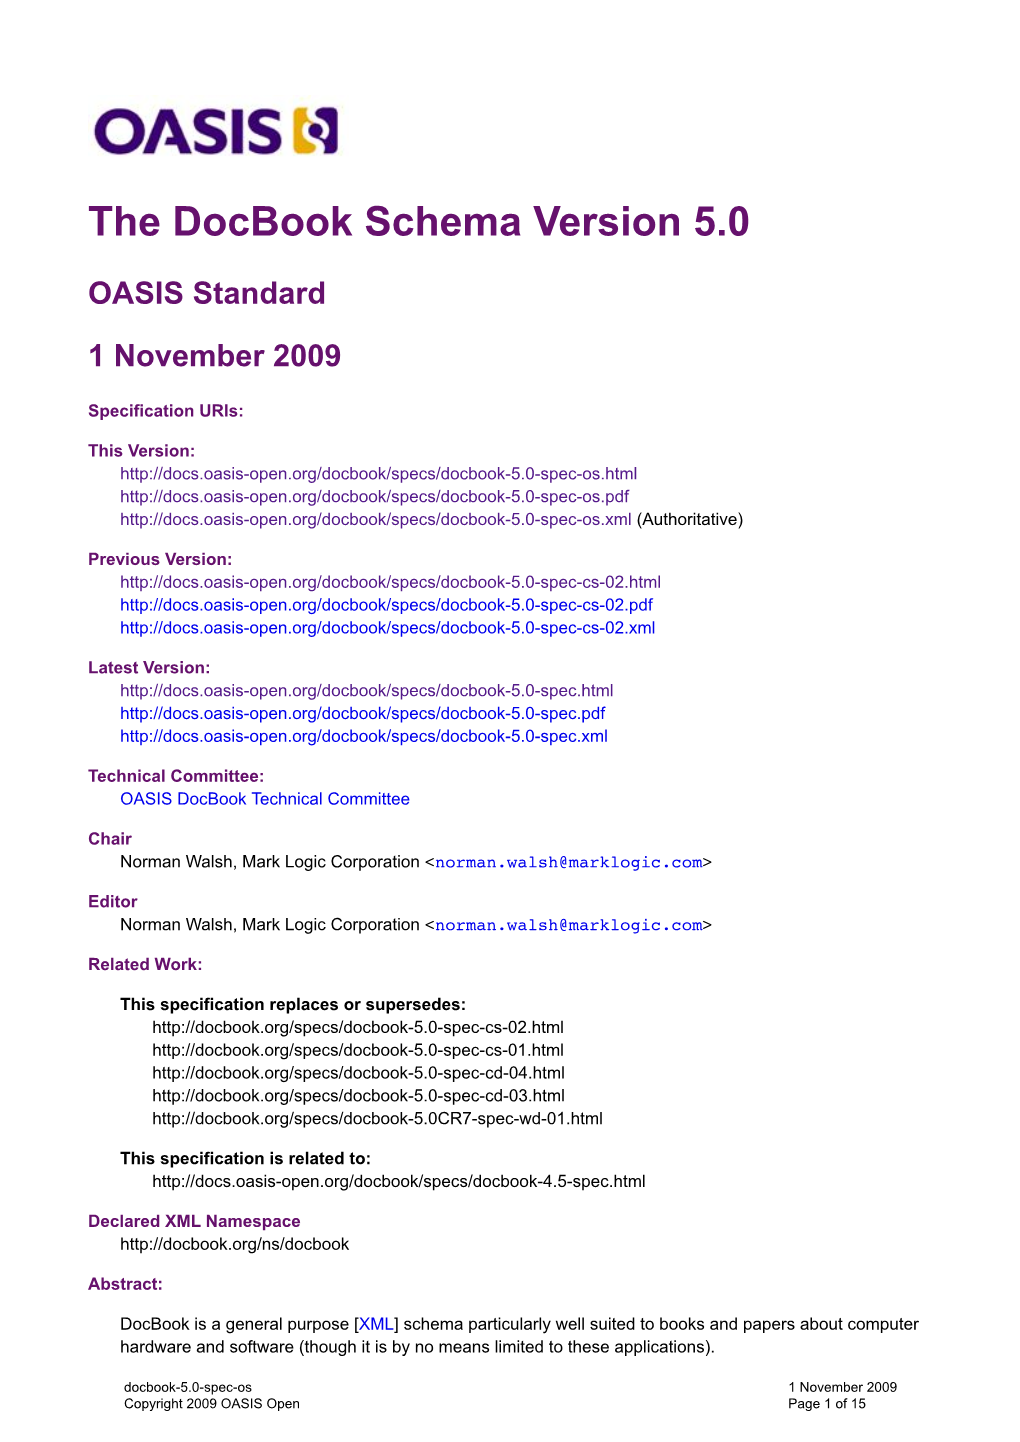 Docbook-5.0-Spec-Os.Pdf (Authoritative)